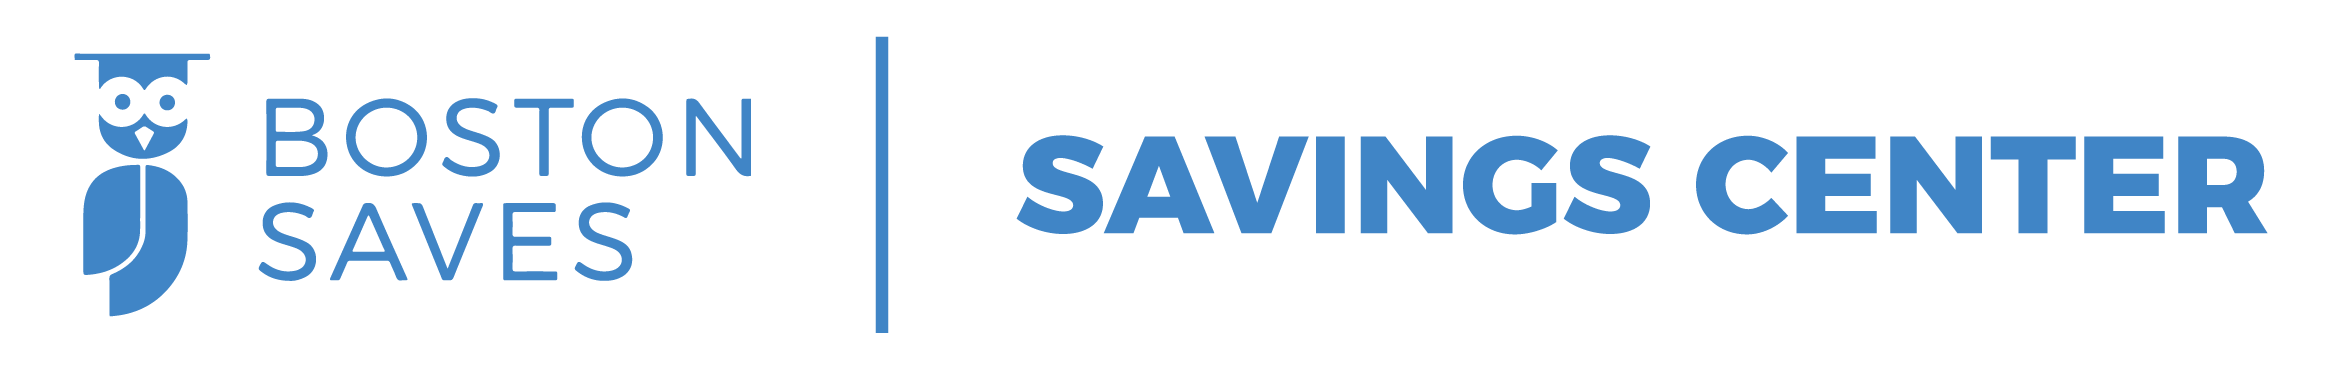 Boston Saves Savings Center